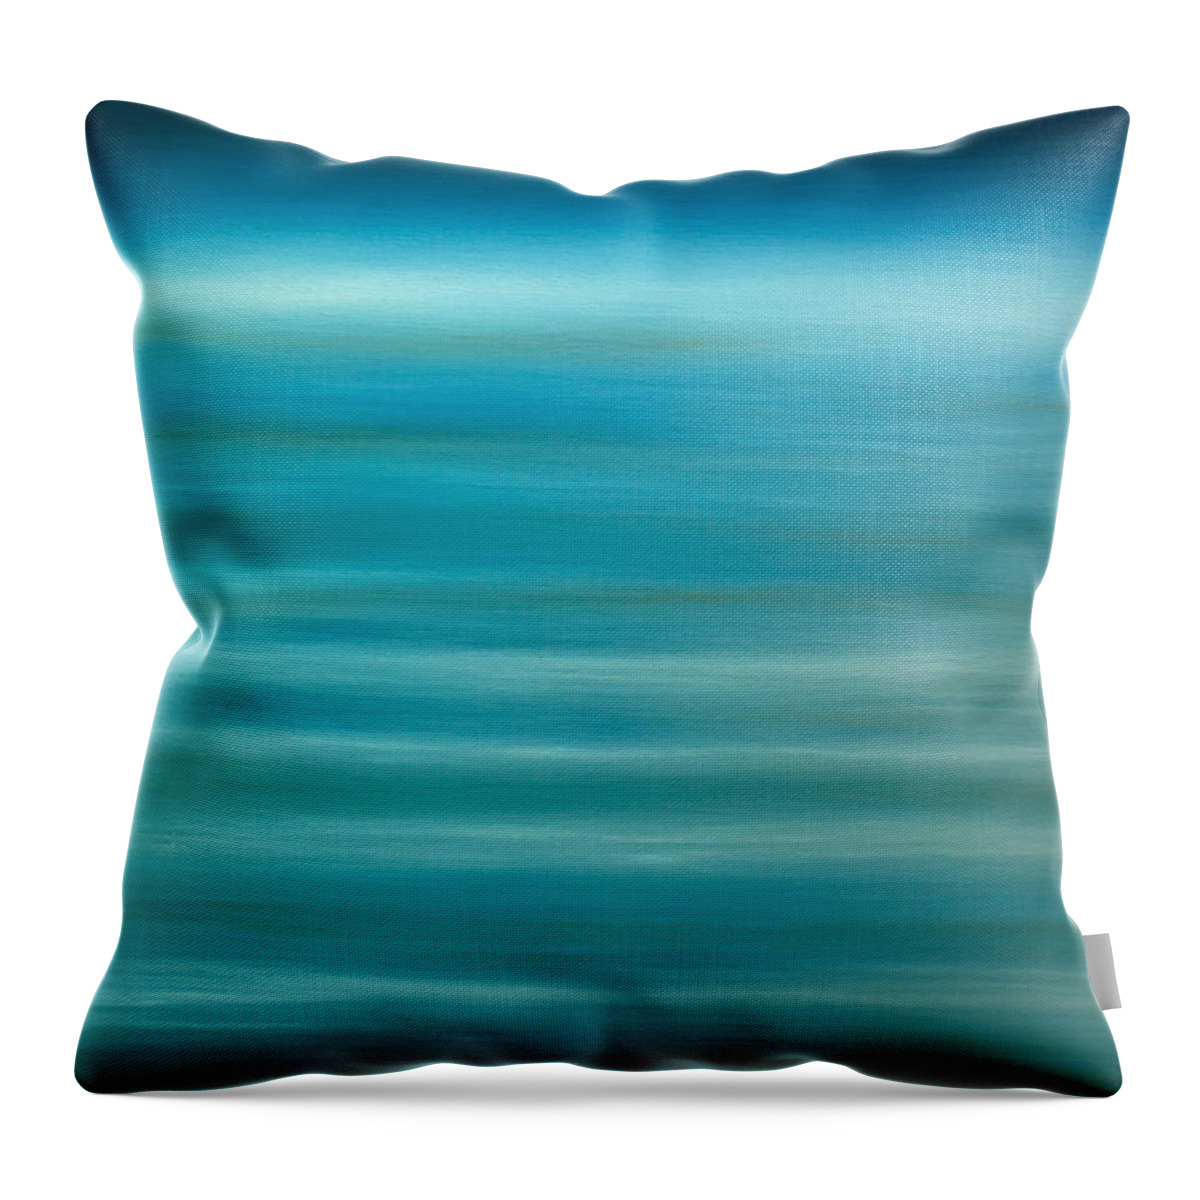 Derek Kaplan Art Throw Pillow featuring the painting Opt.54.14 Ocean In The Sky by Derek Kaplan